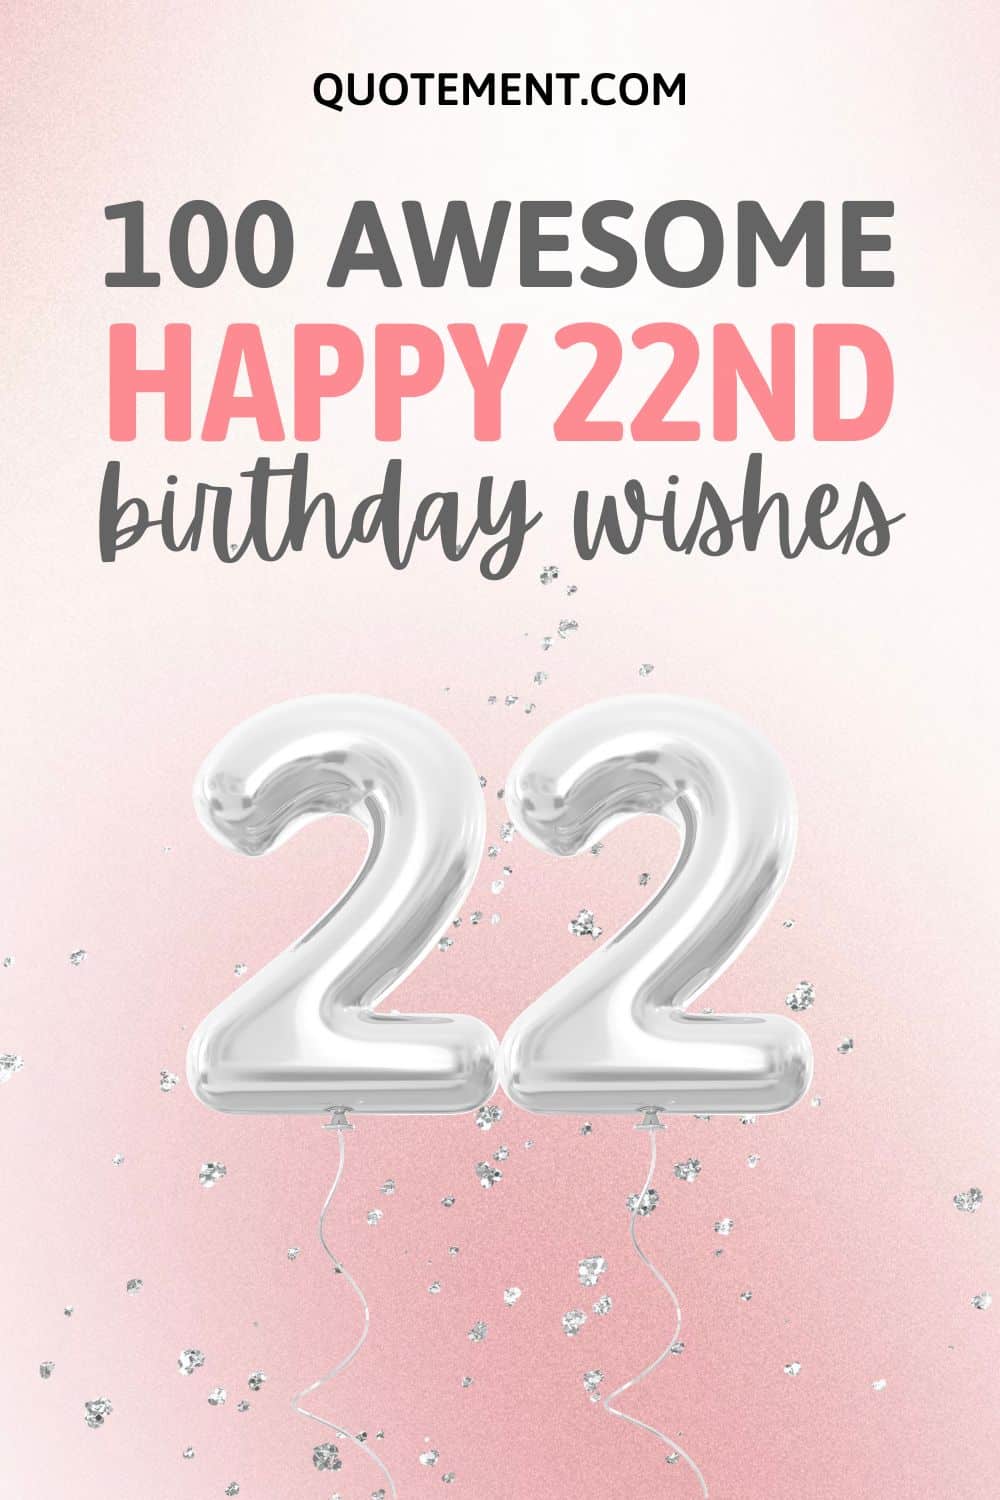 100 Fantastic Ways To Wish Someone A Happy 22nd Birthday